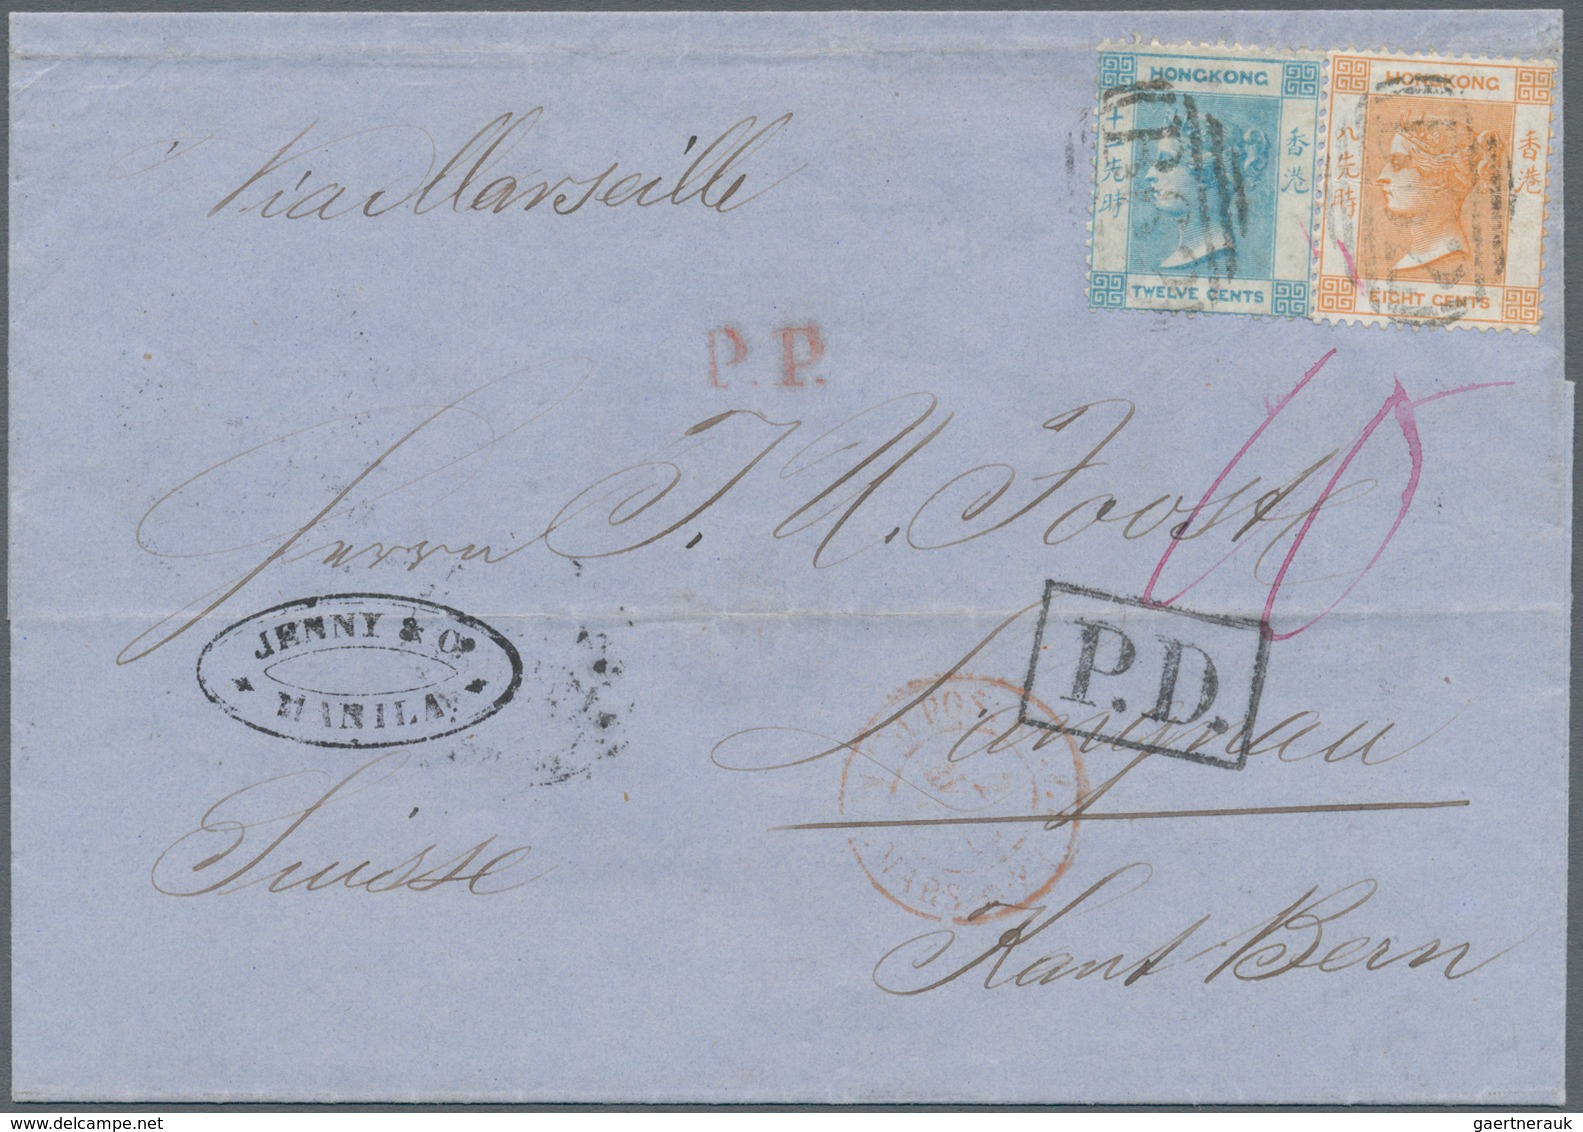 00401 Philippinen: Manila: 1868, QV 8 C. Orange And 12 C. Blue Tied Oval "862" To Folded Envelope With Ova - Philippinen